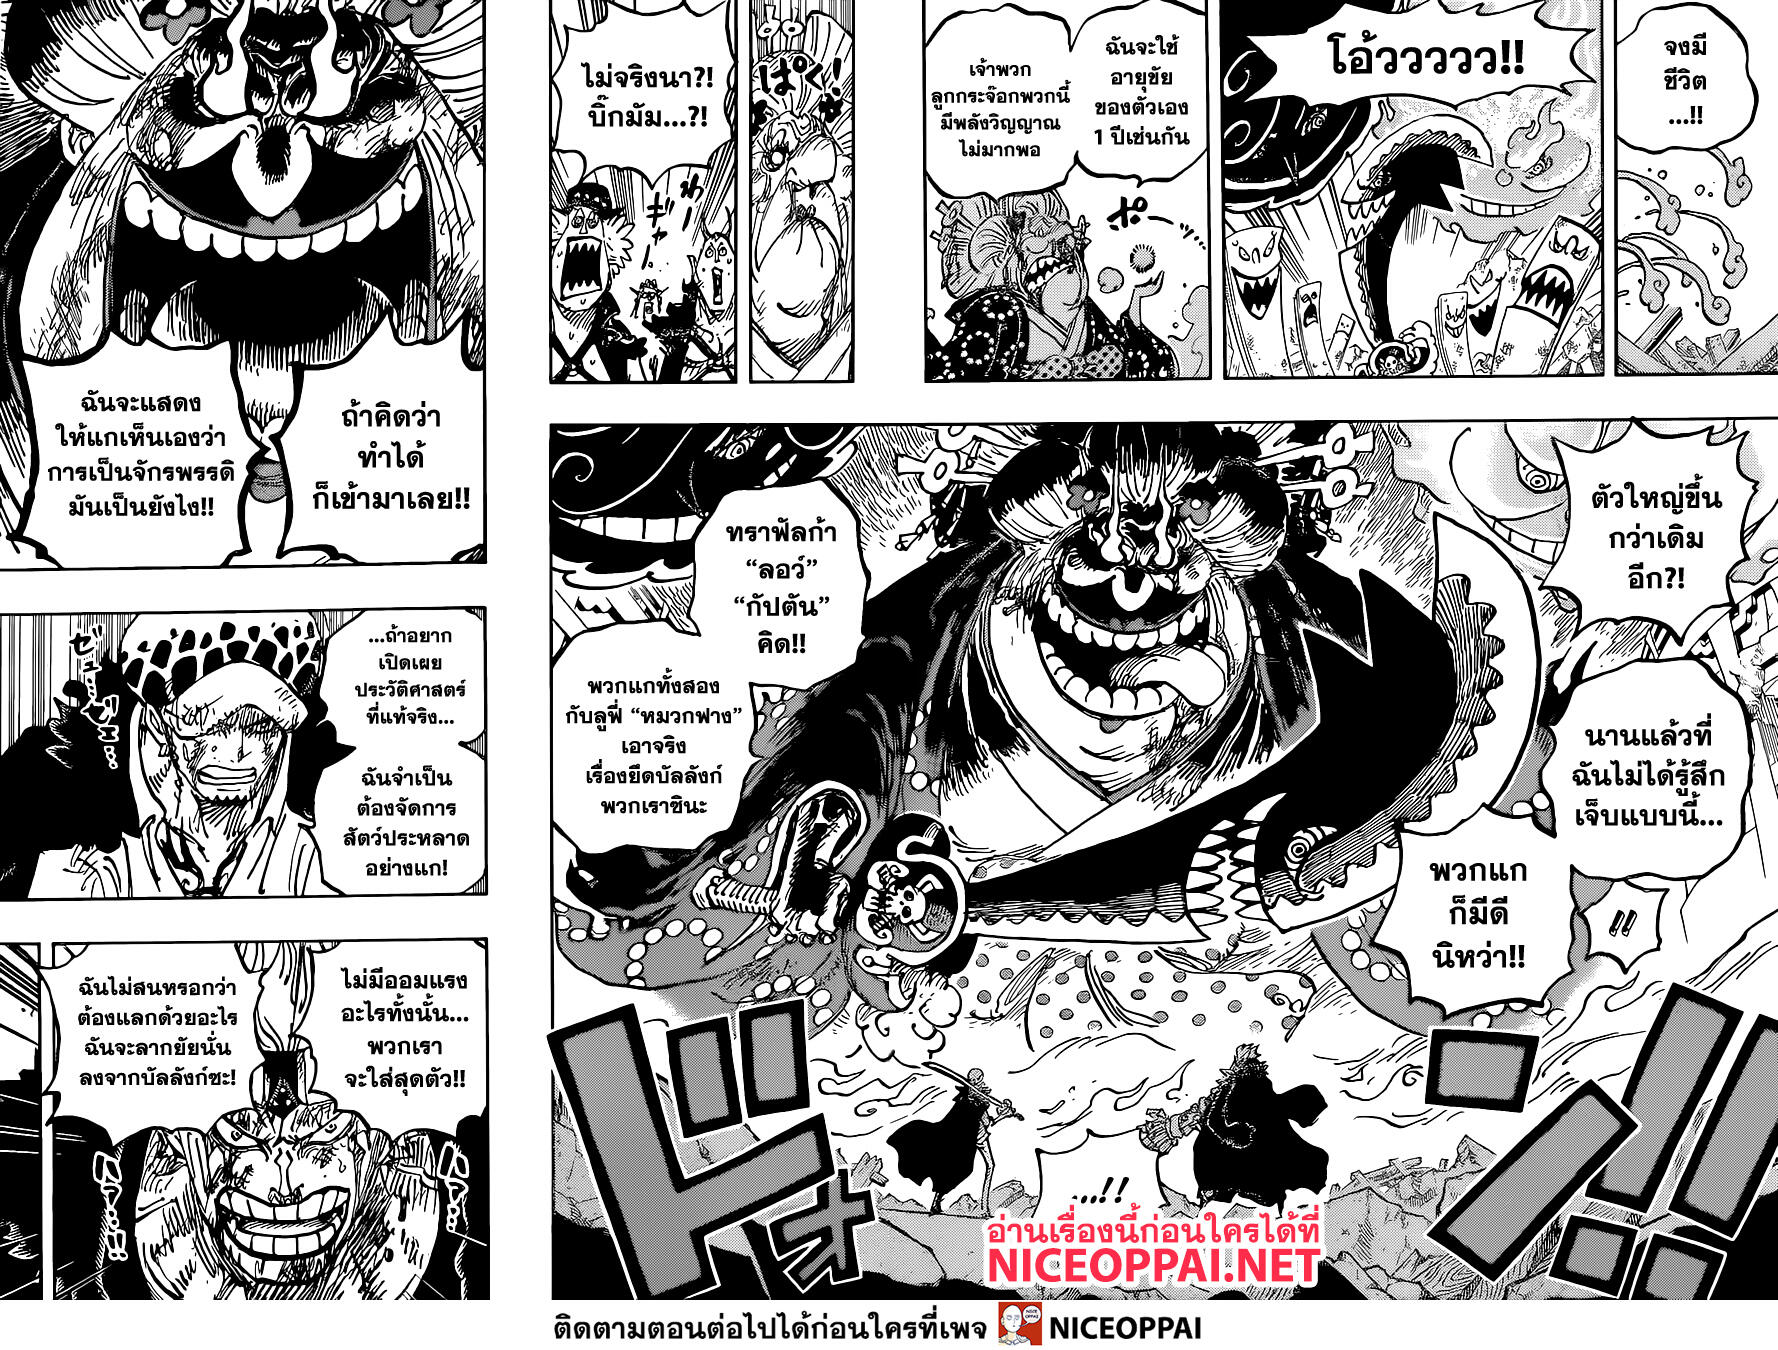 One Piece 1031-TH-นักรบแห่งวิทยาศาสตร์